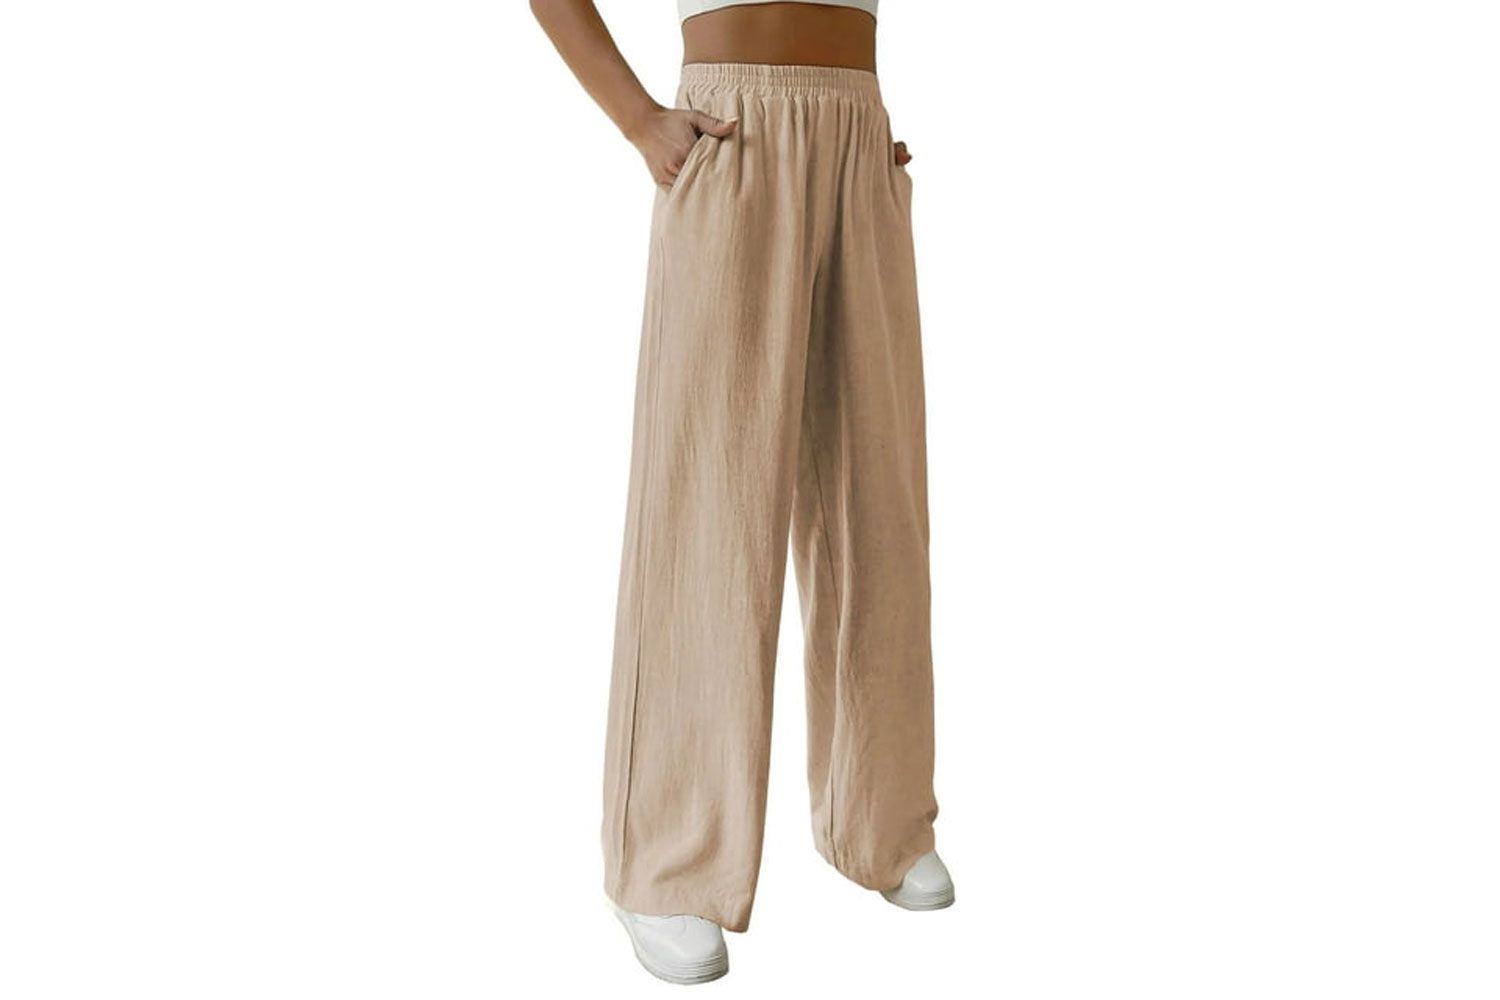 Walmart Rosvigor Wide Leg Pants for Women Elastic Waist Womens Pants Casual Lounge Trousers with Pockets